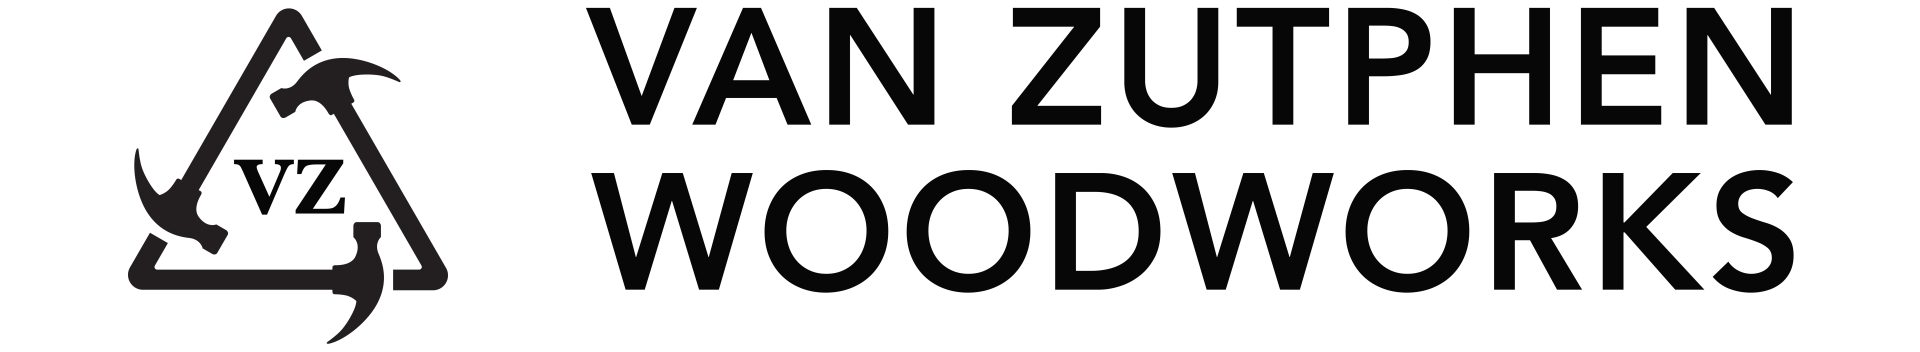 VZ Woodworks logo Houtwerk final